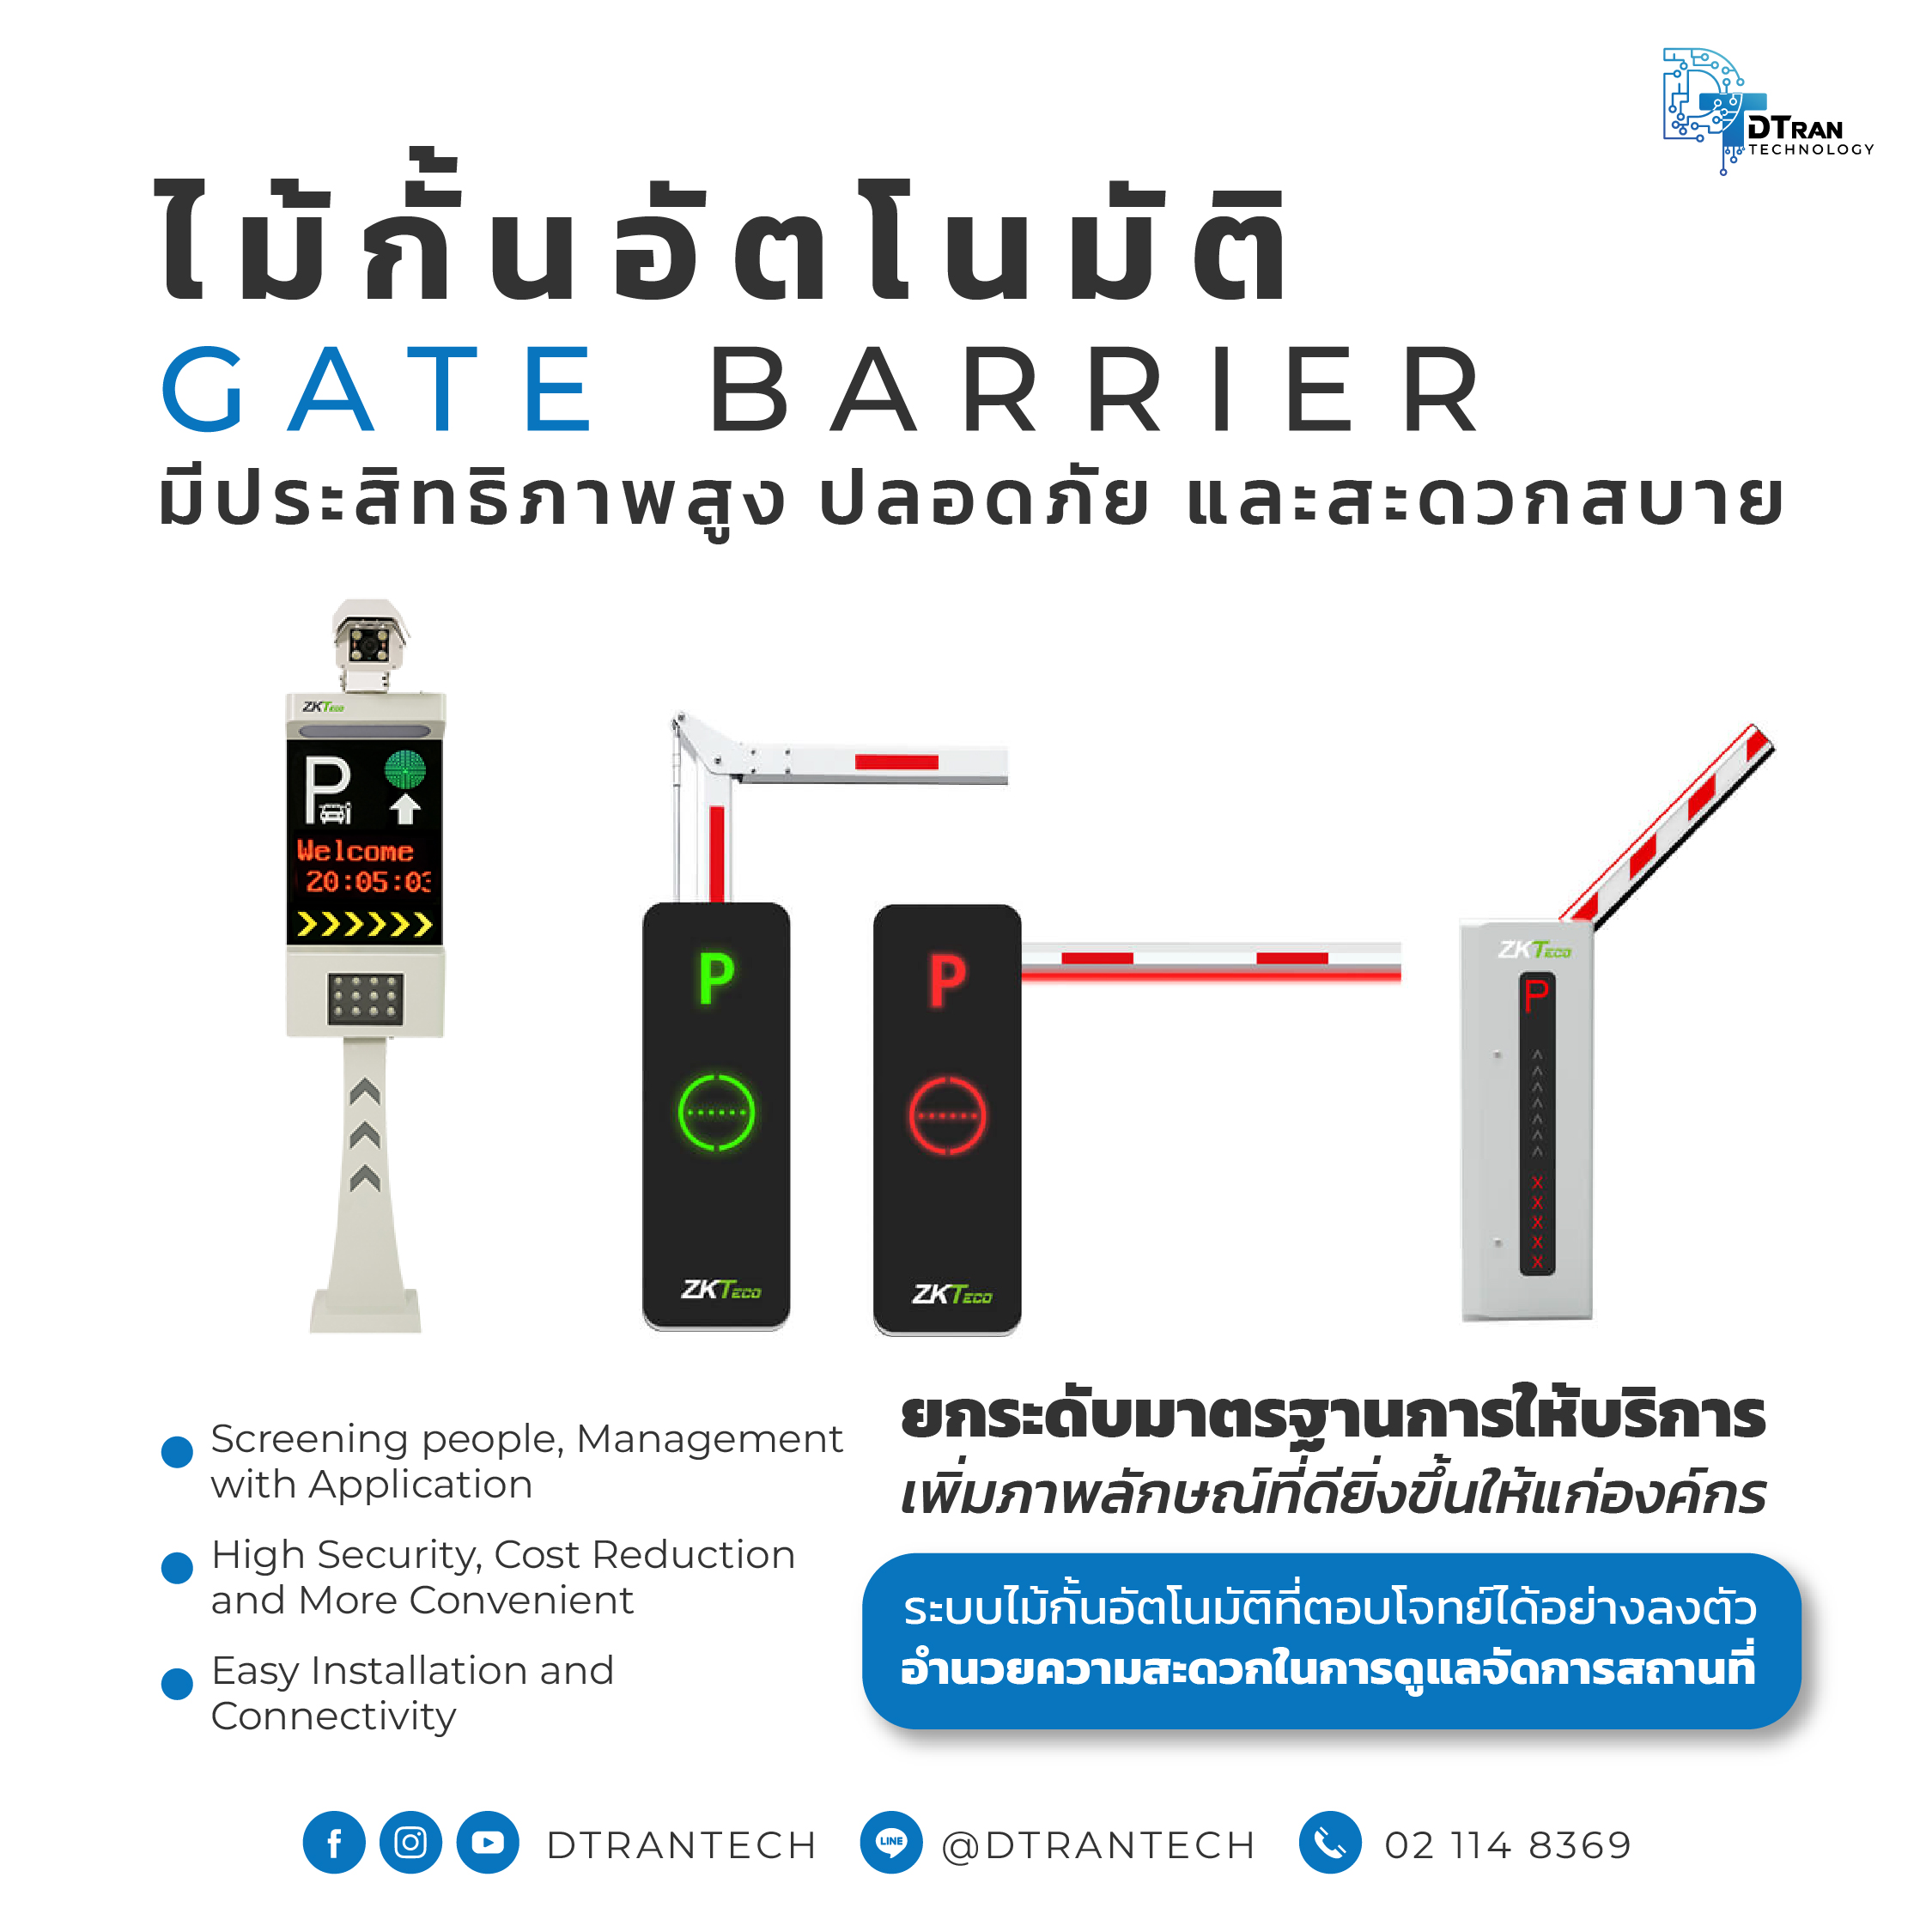 Gate Barrier